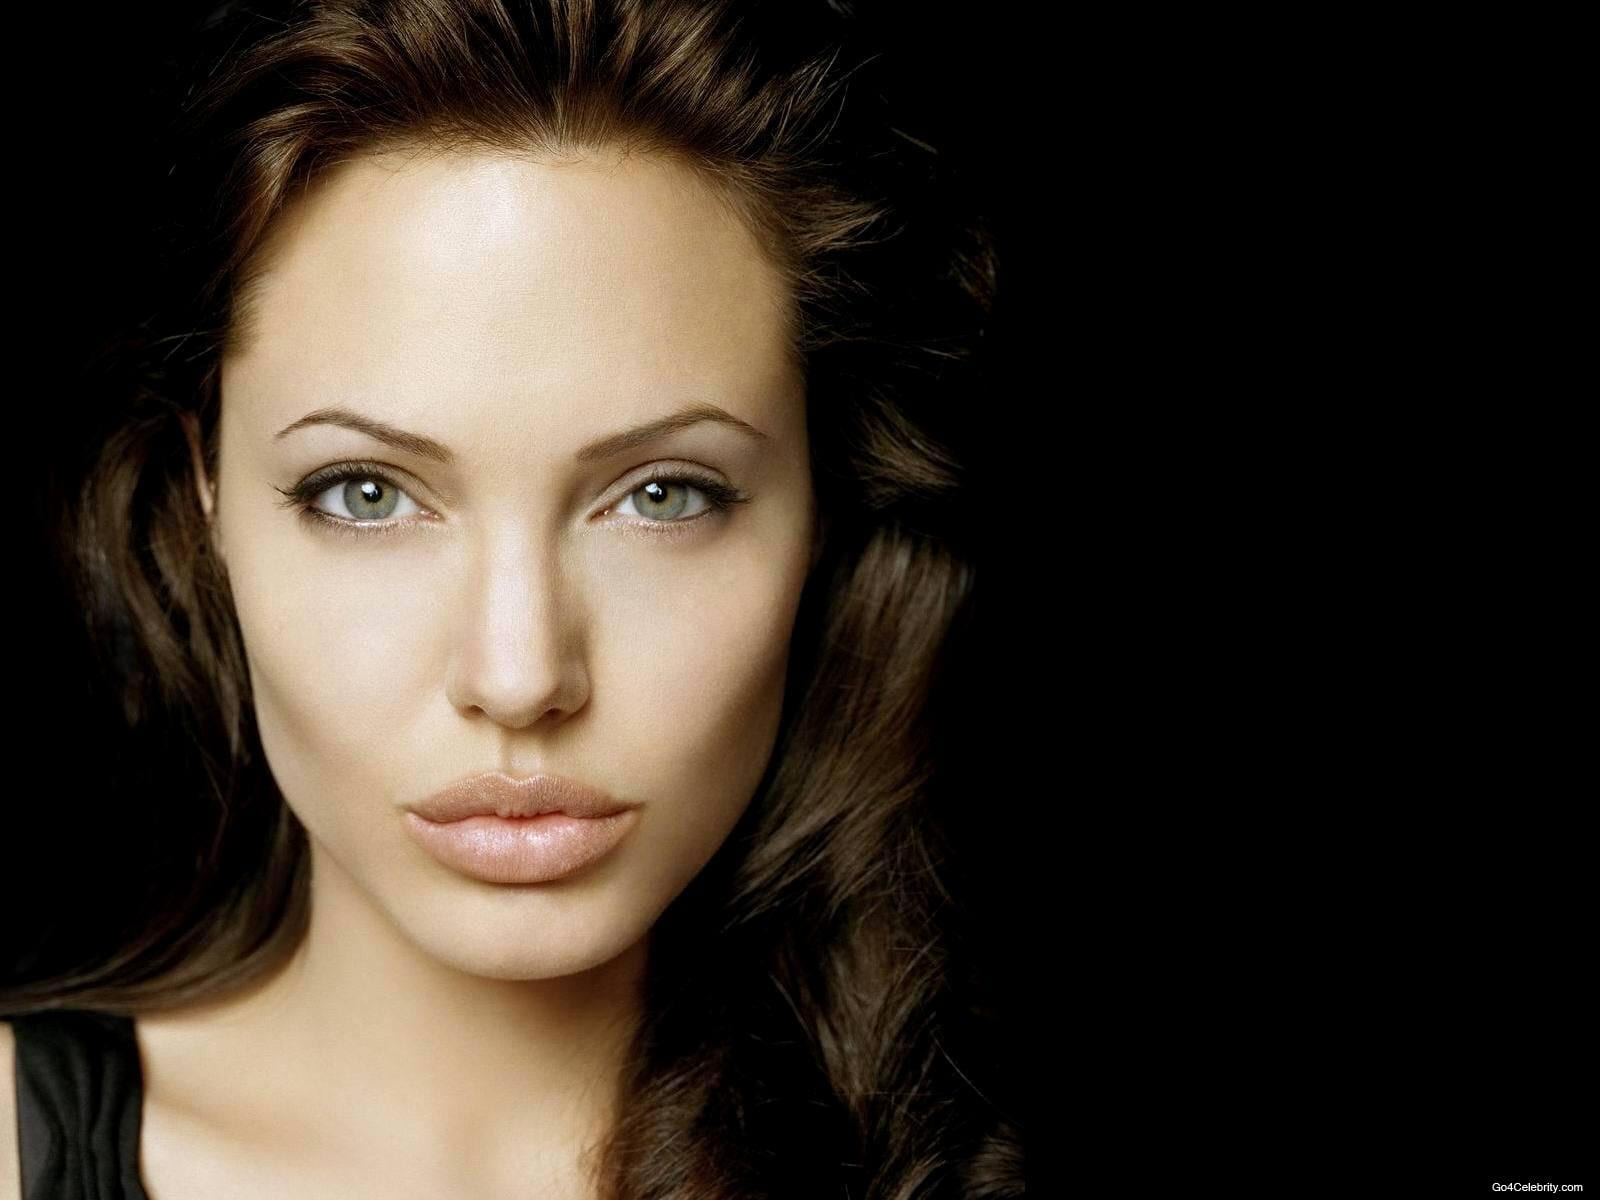 Angelina Jolie - Most Beautiful Women in the World